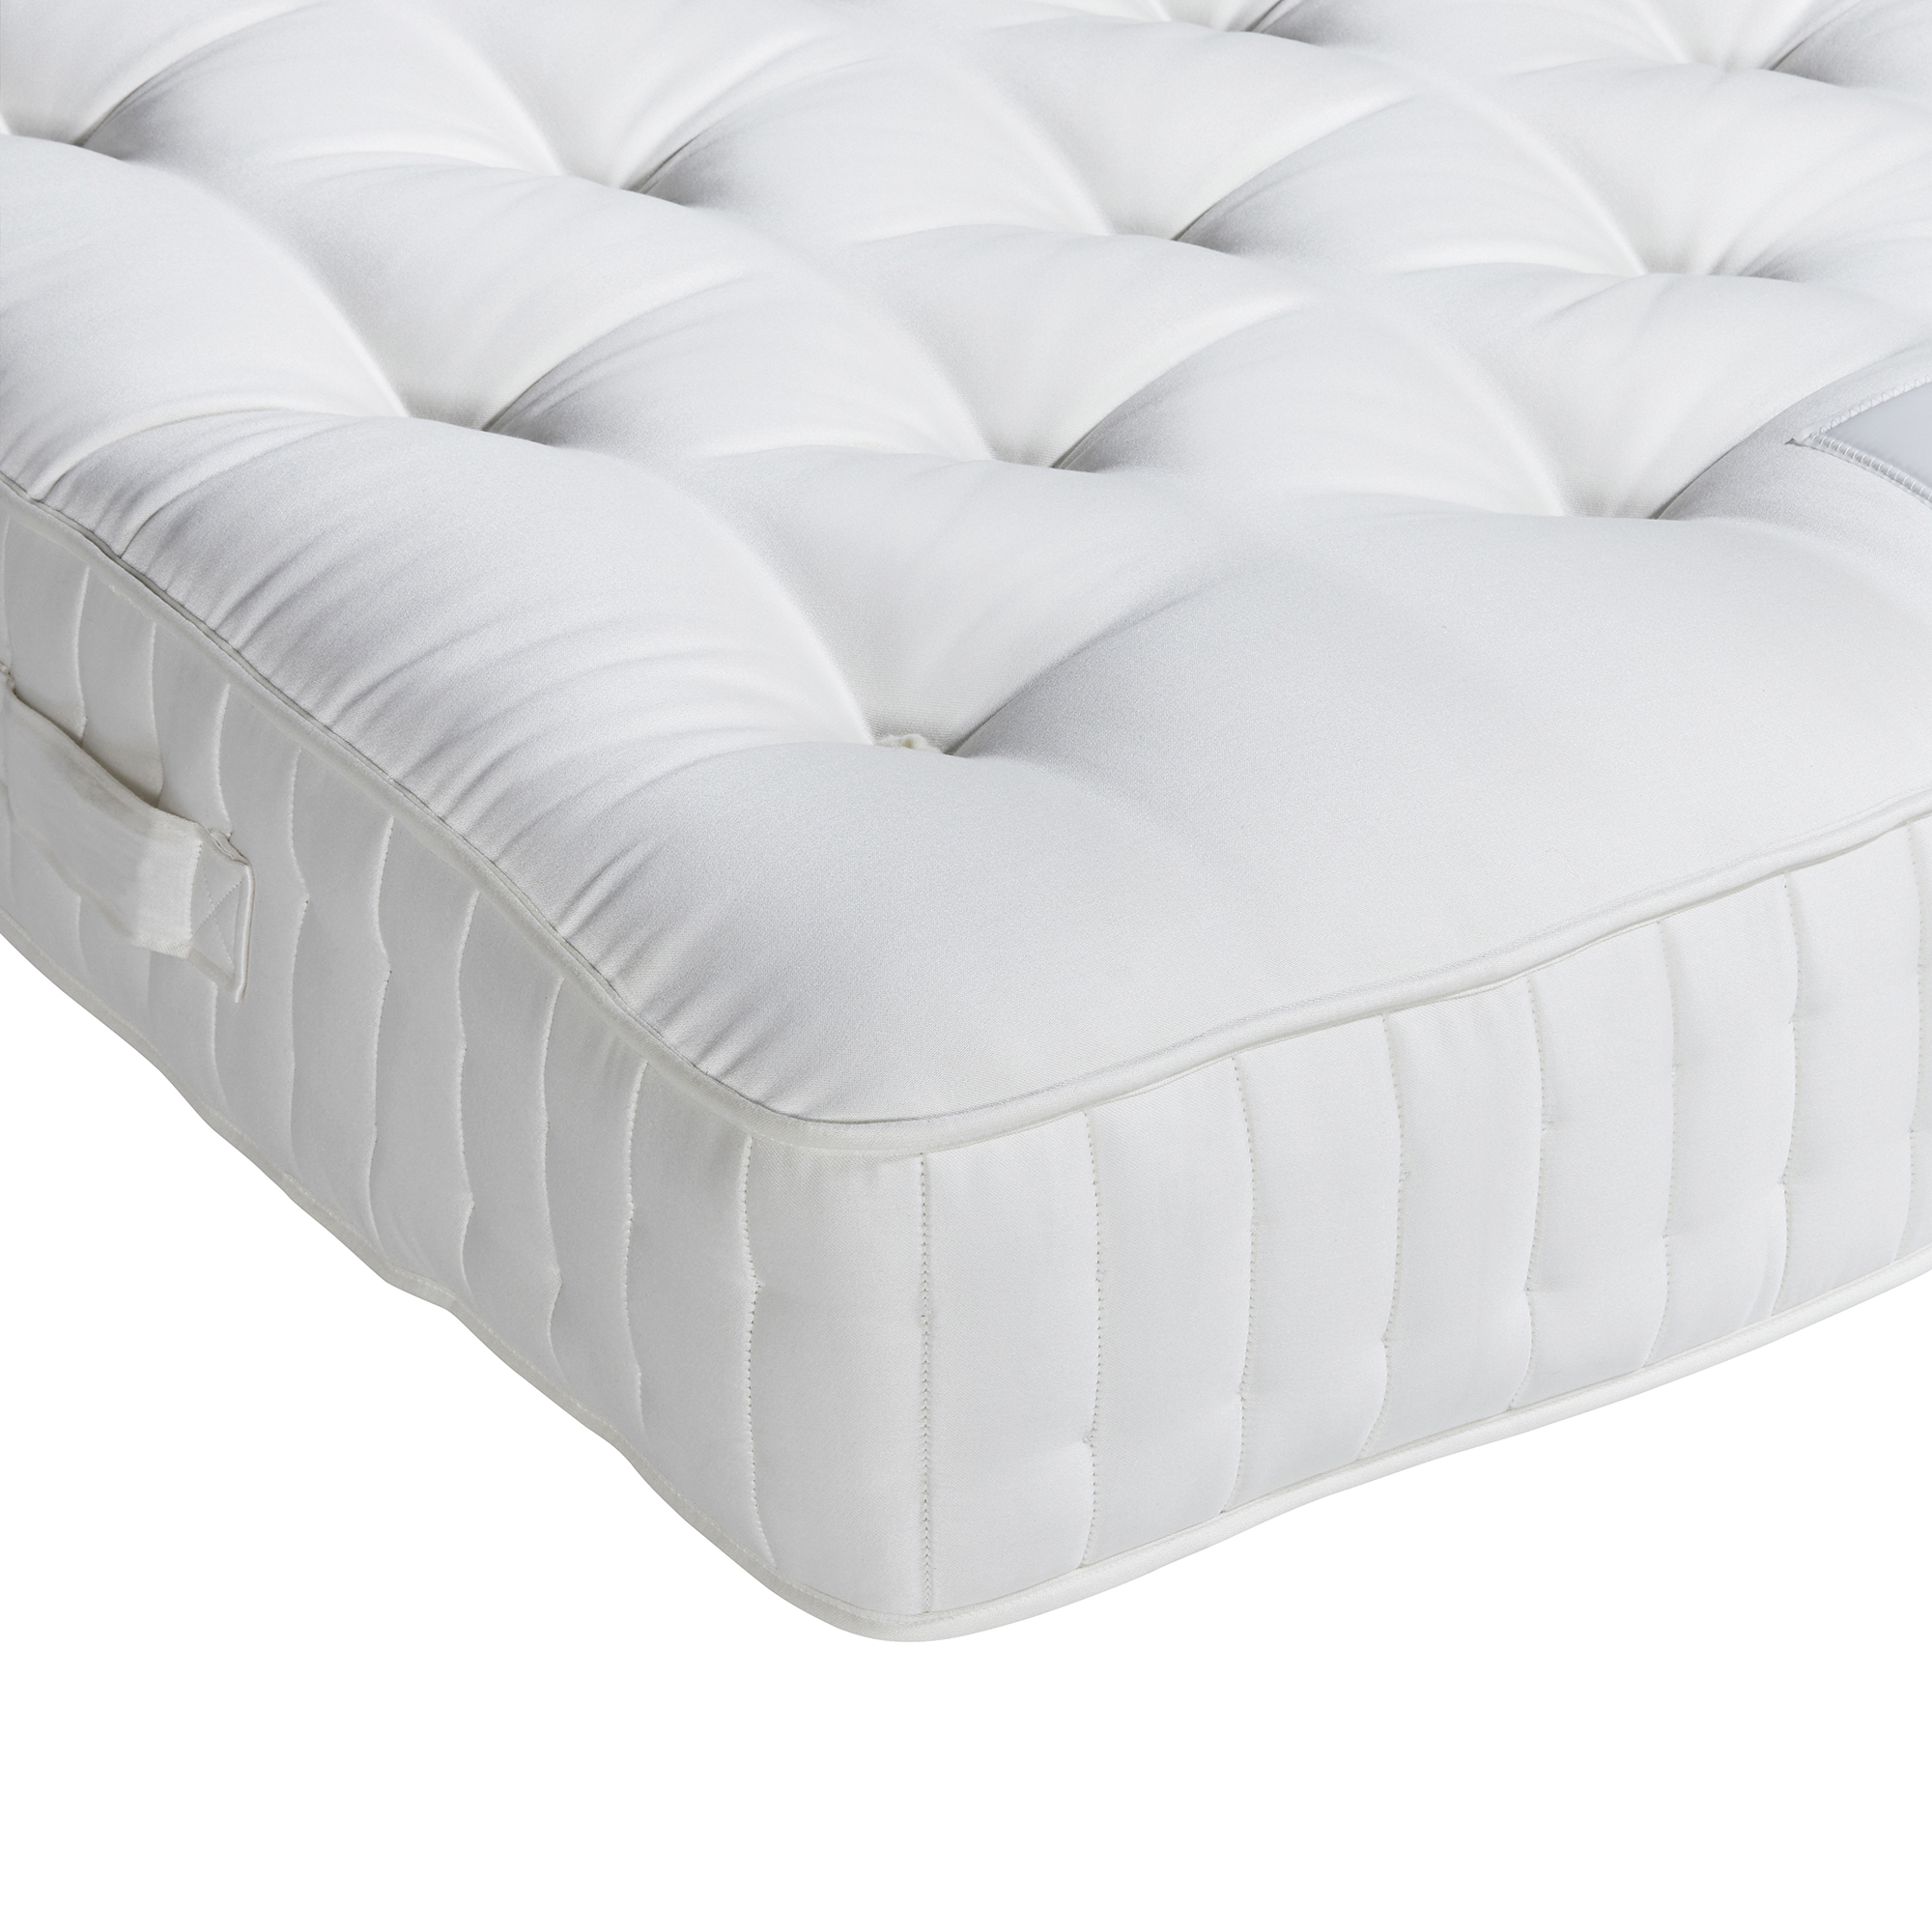 Photo of Somnus carlton 150x200cm king size mattress in white